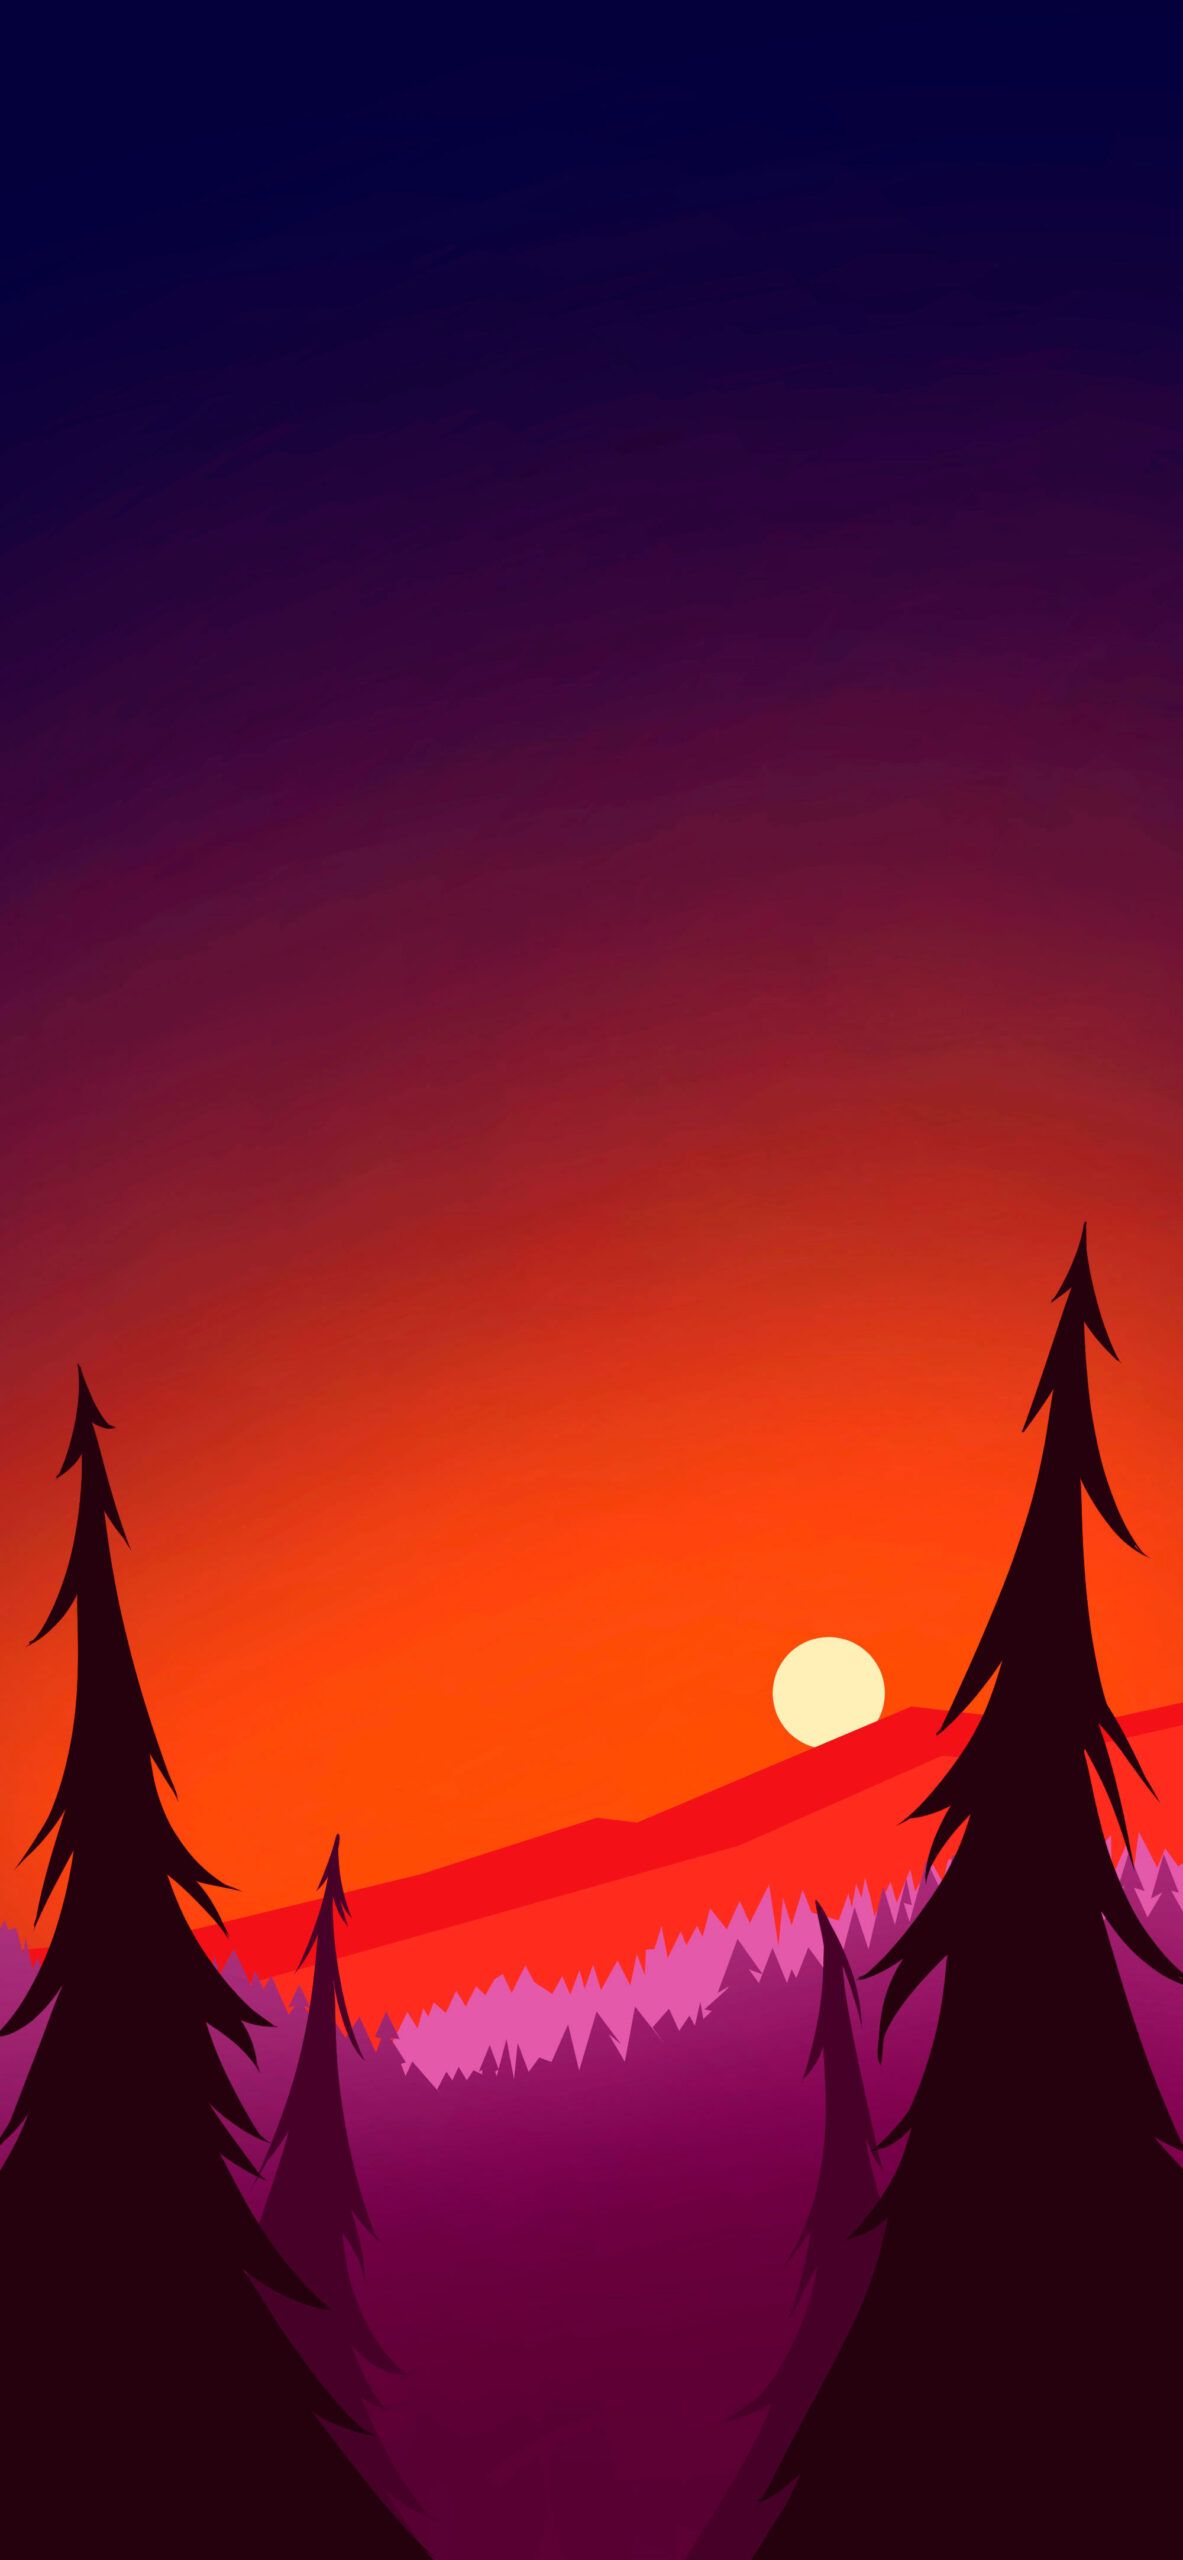 Gravity Falls Sunset Aesthetic